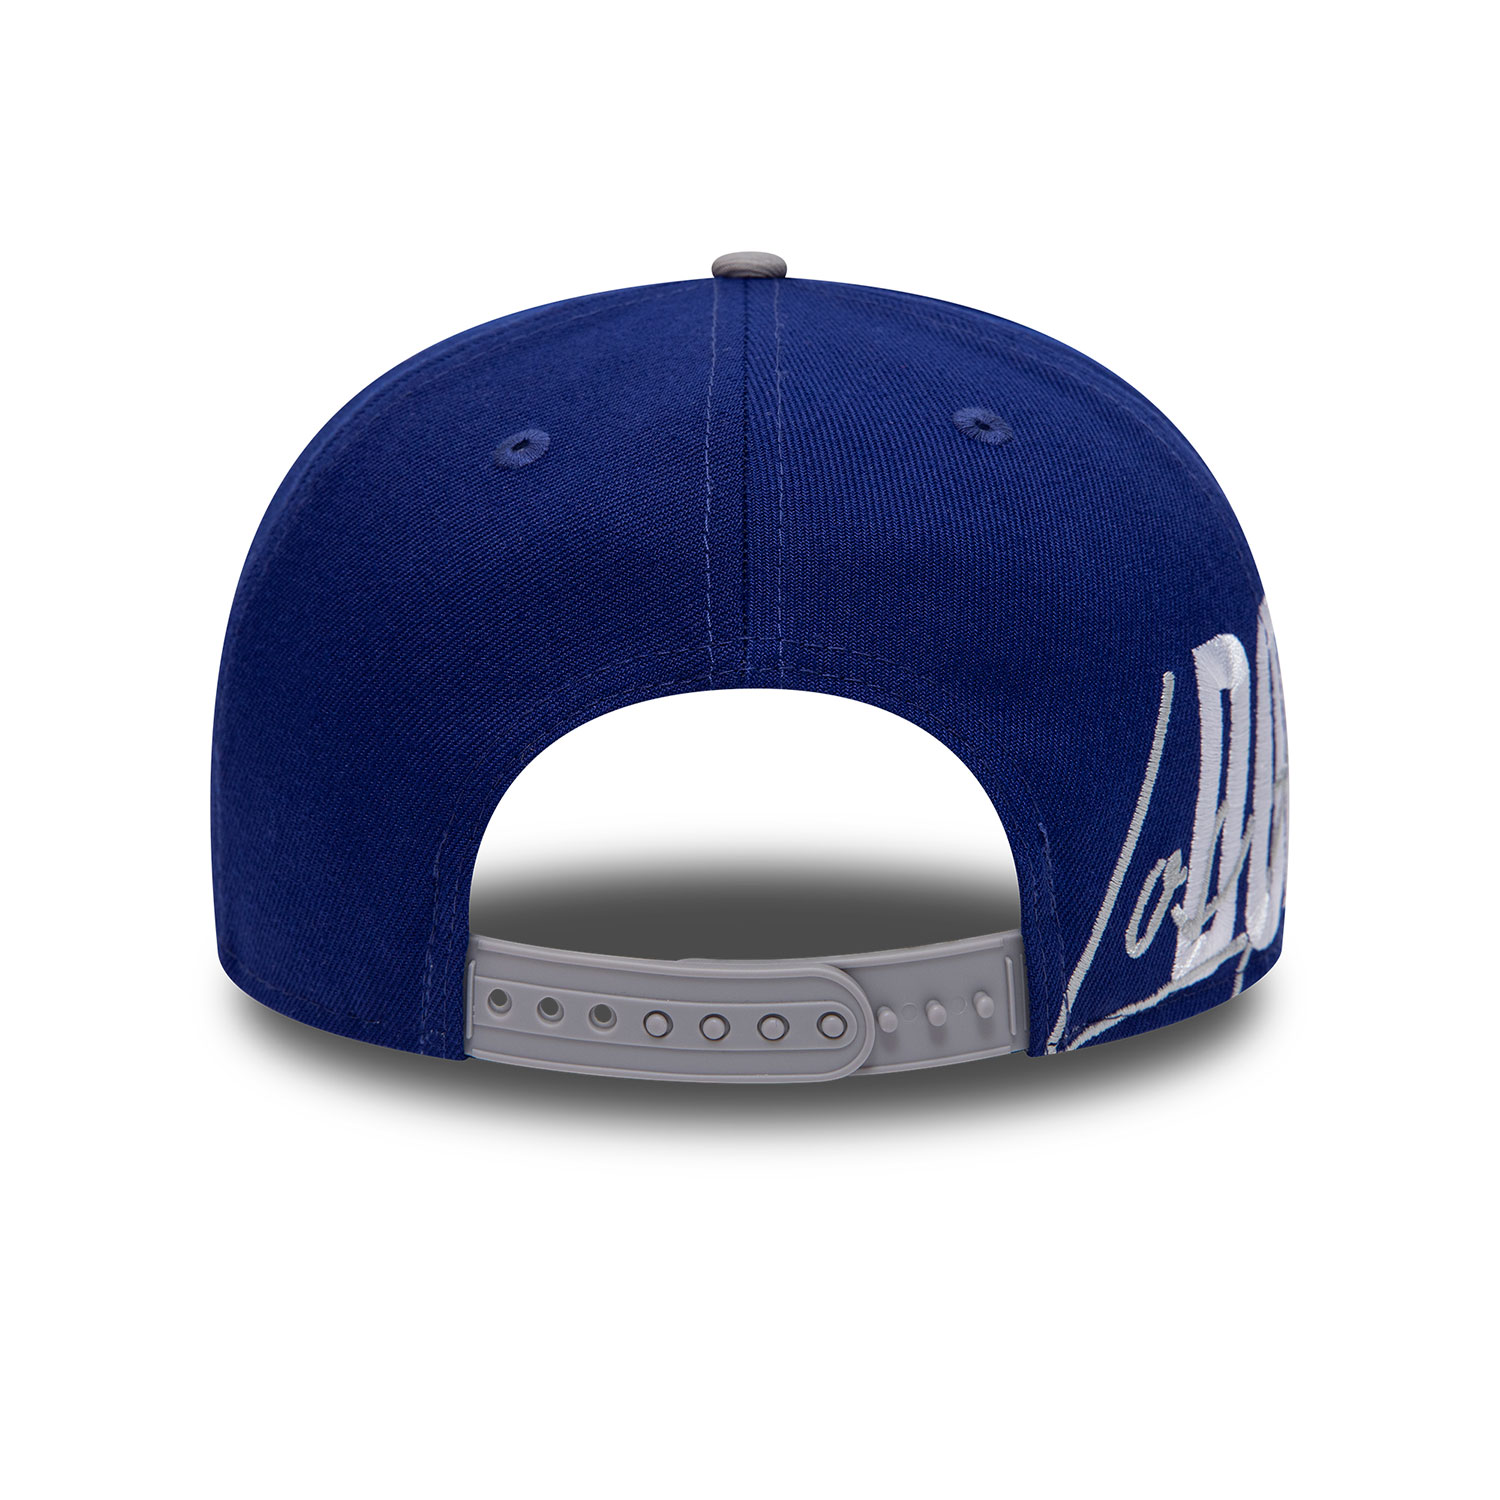 LA Dodgers Side Font Blue 9FIFTY Snapback Cap